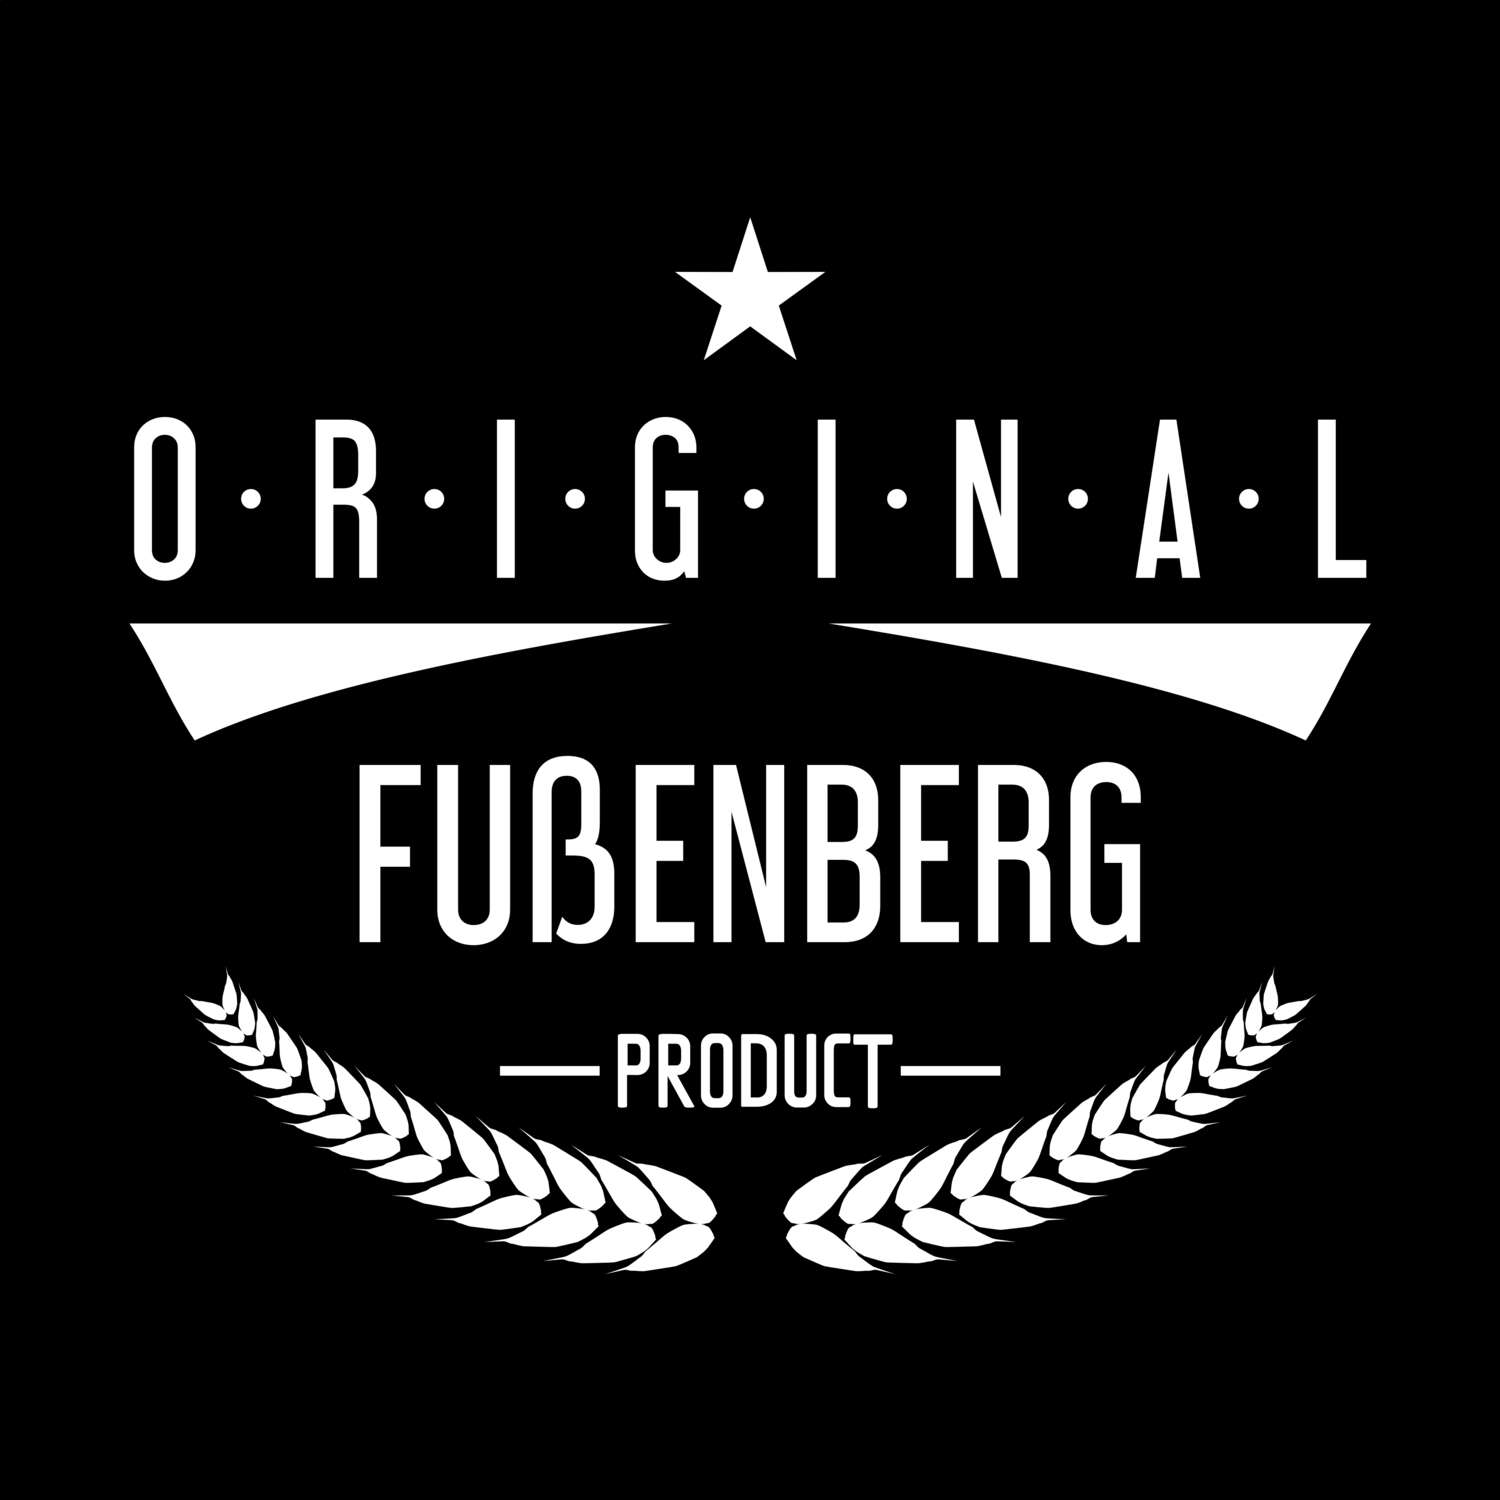 Fußenberg T-Shirt »Original Product«